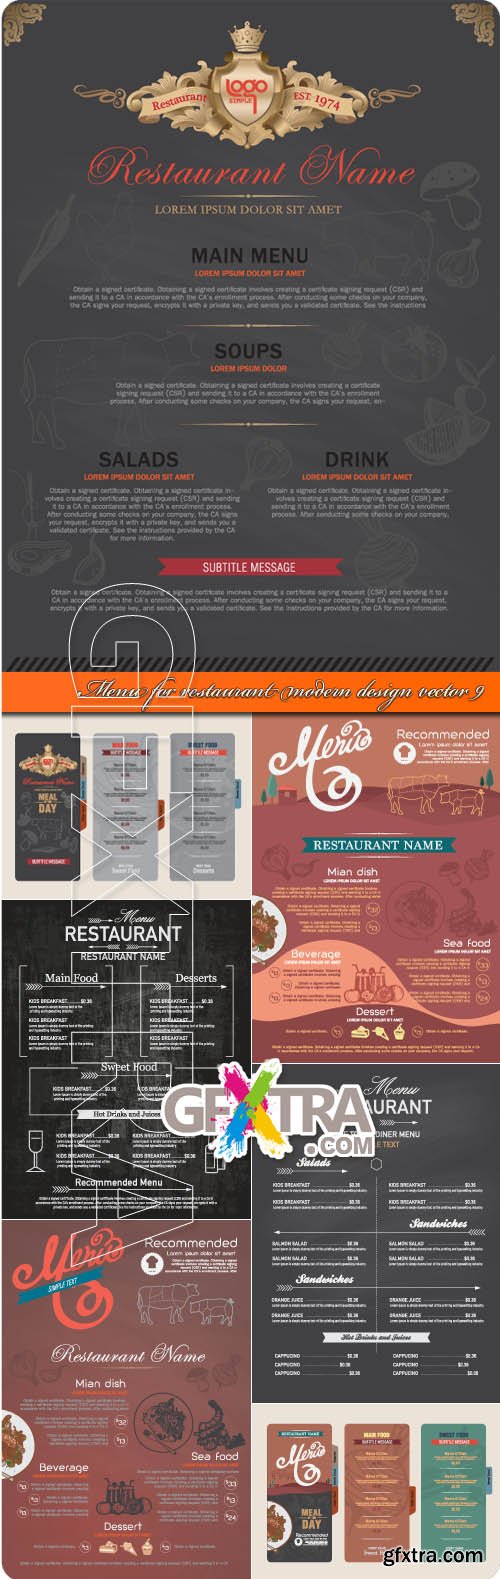 Menu for restaurant modern design vector 9